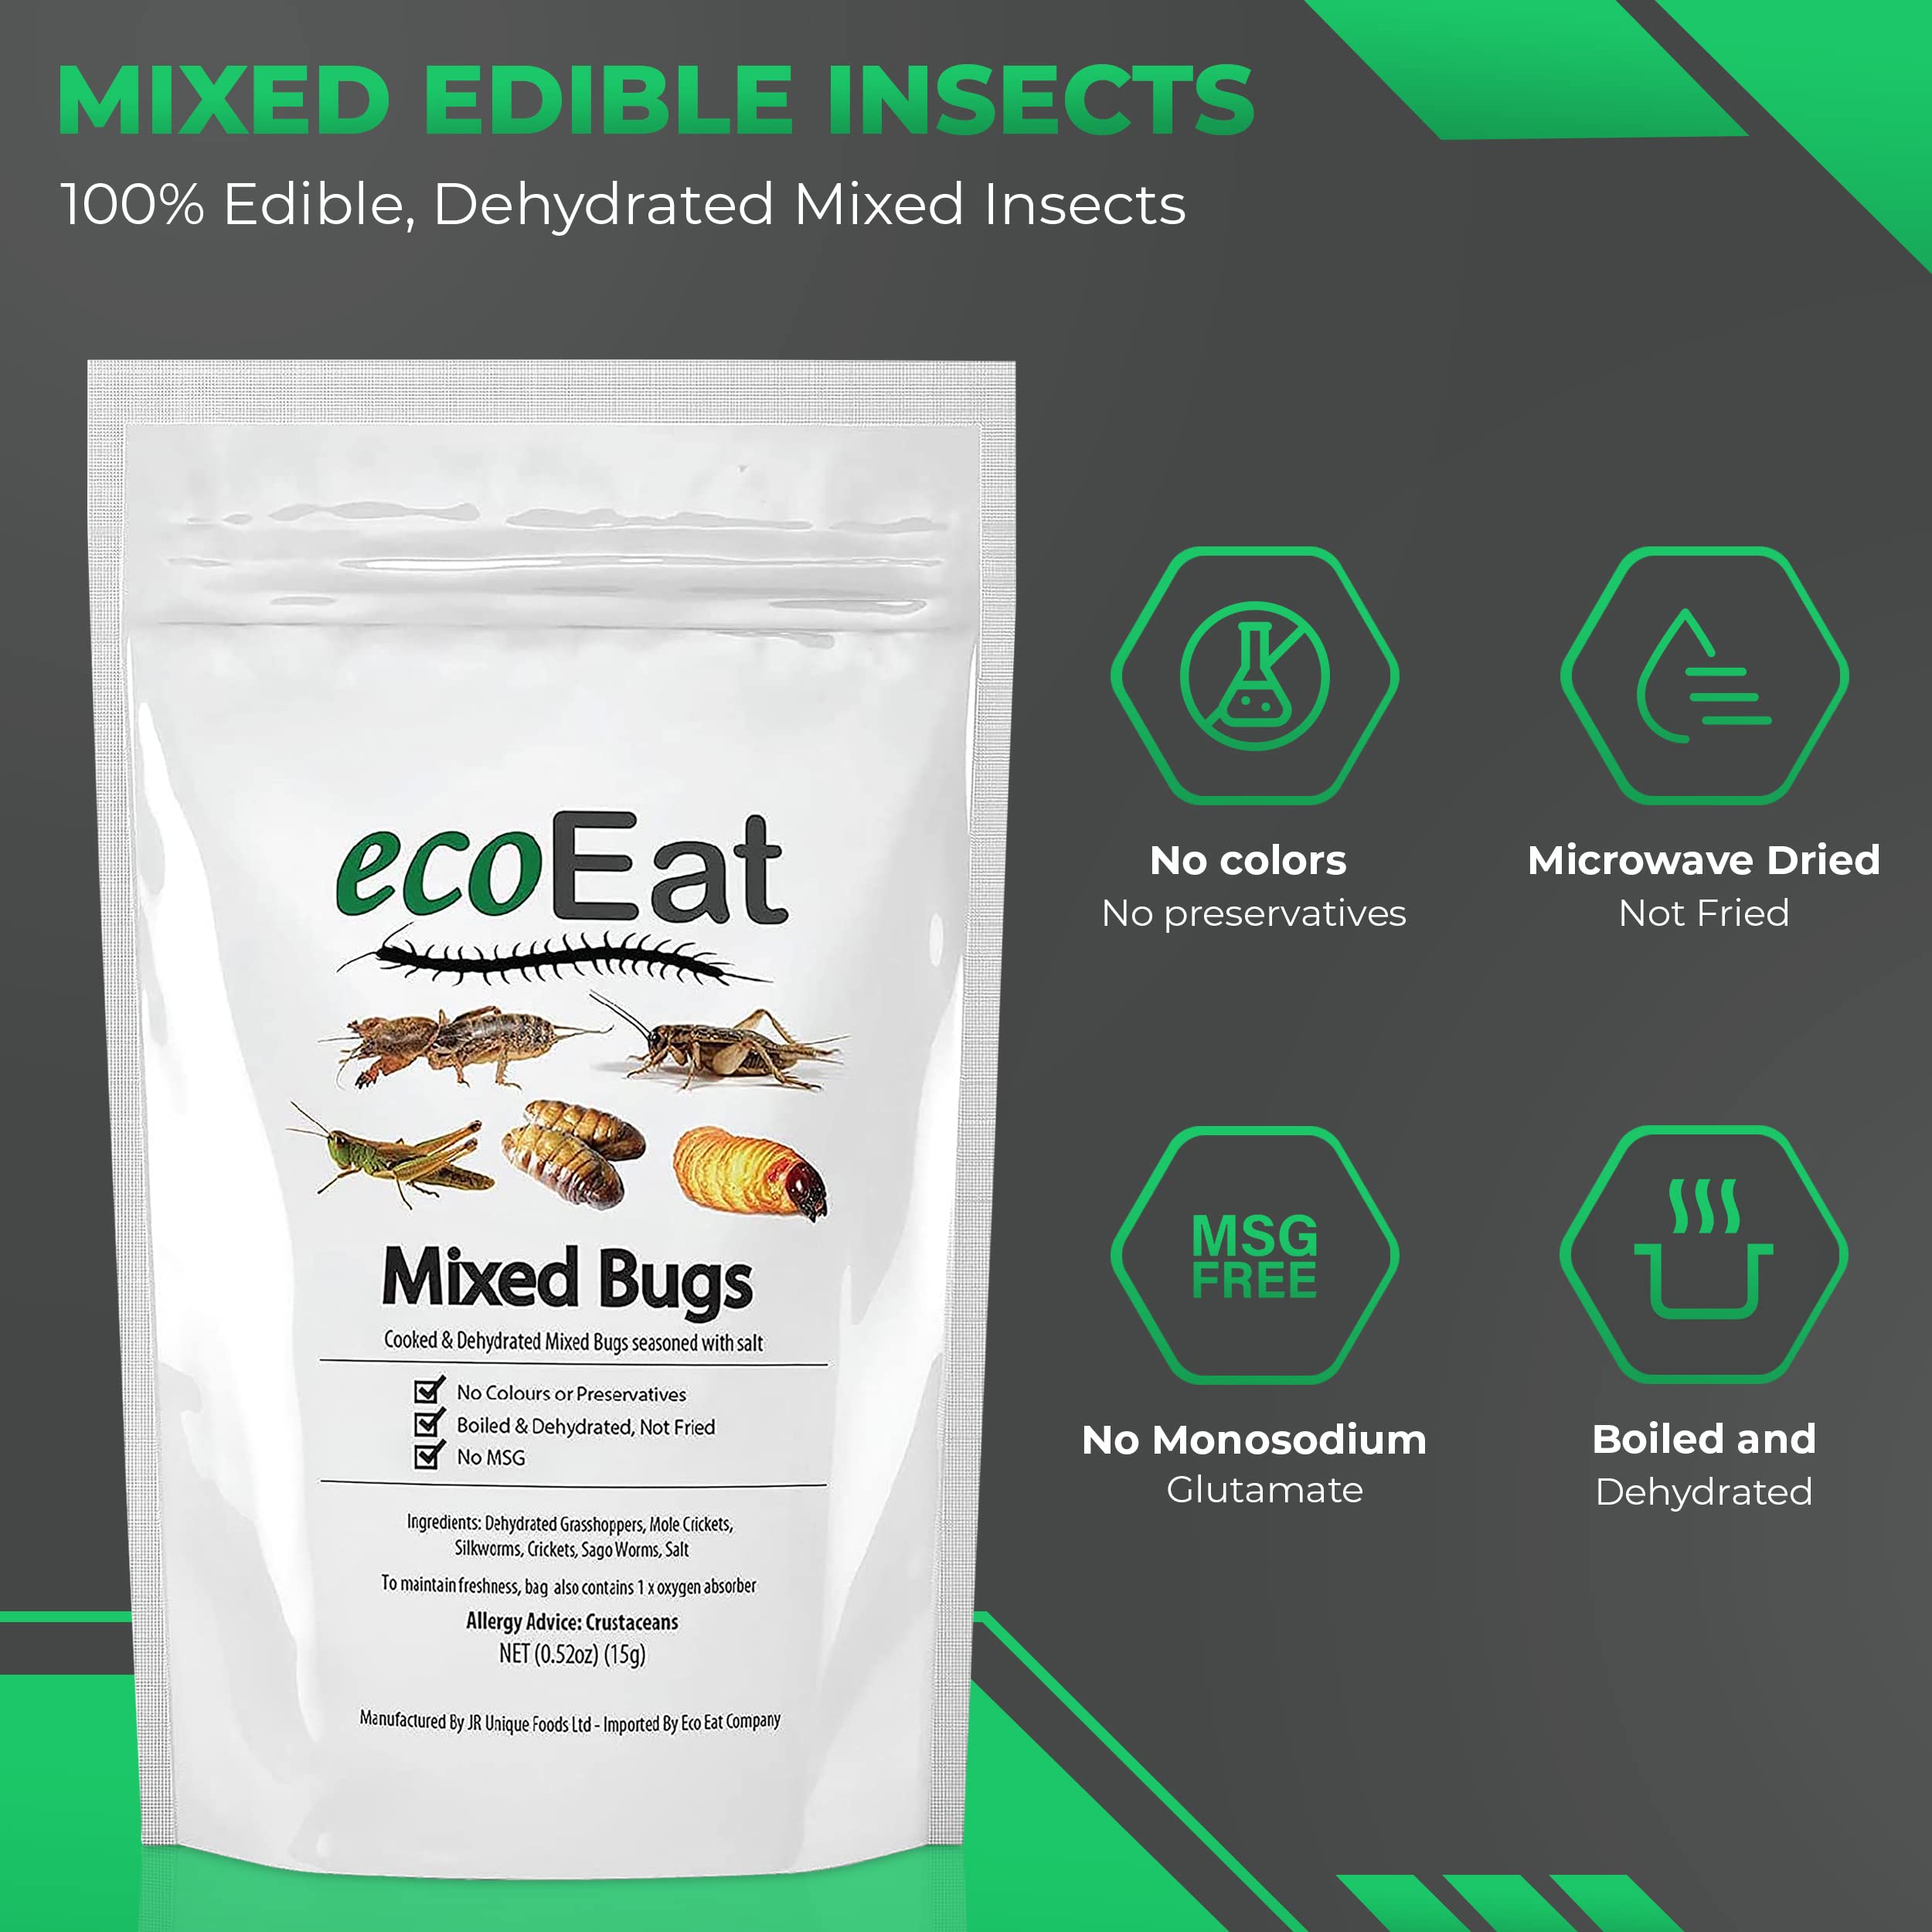 ecoEat Mixed Edible Insects to Eat- Edible Bugs Edible Dehydrated not Fried - Mixed Bugs (Dehydrated Grasshoppers, Mole Crickets, Silkworms, Crickets, Sago Worms)